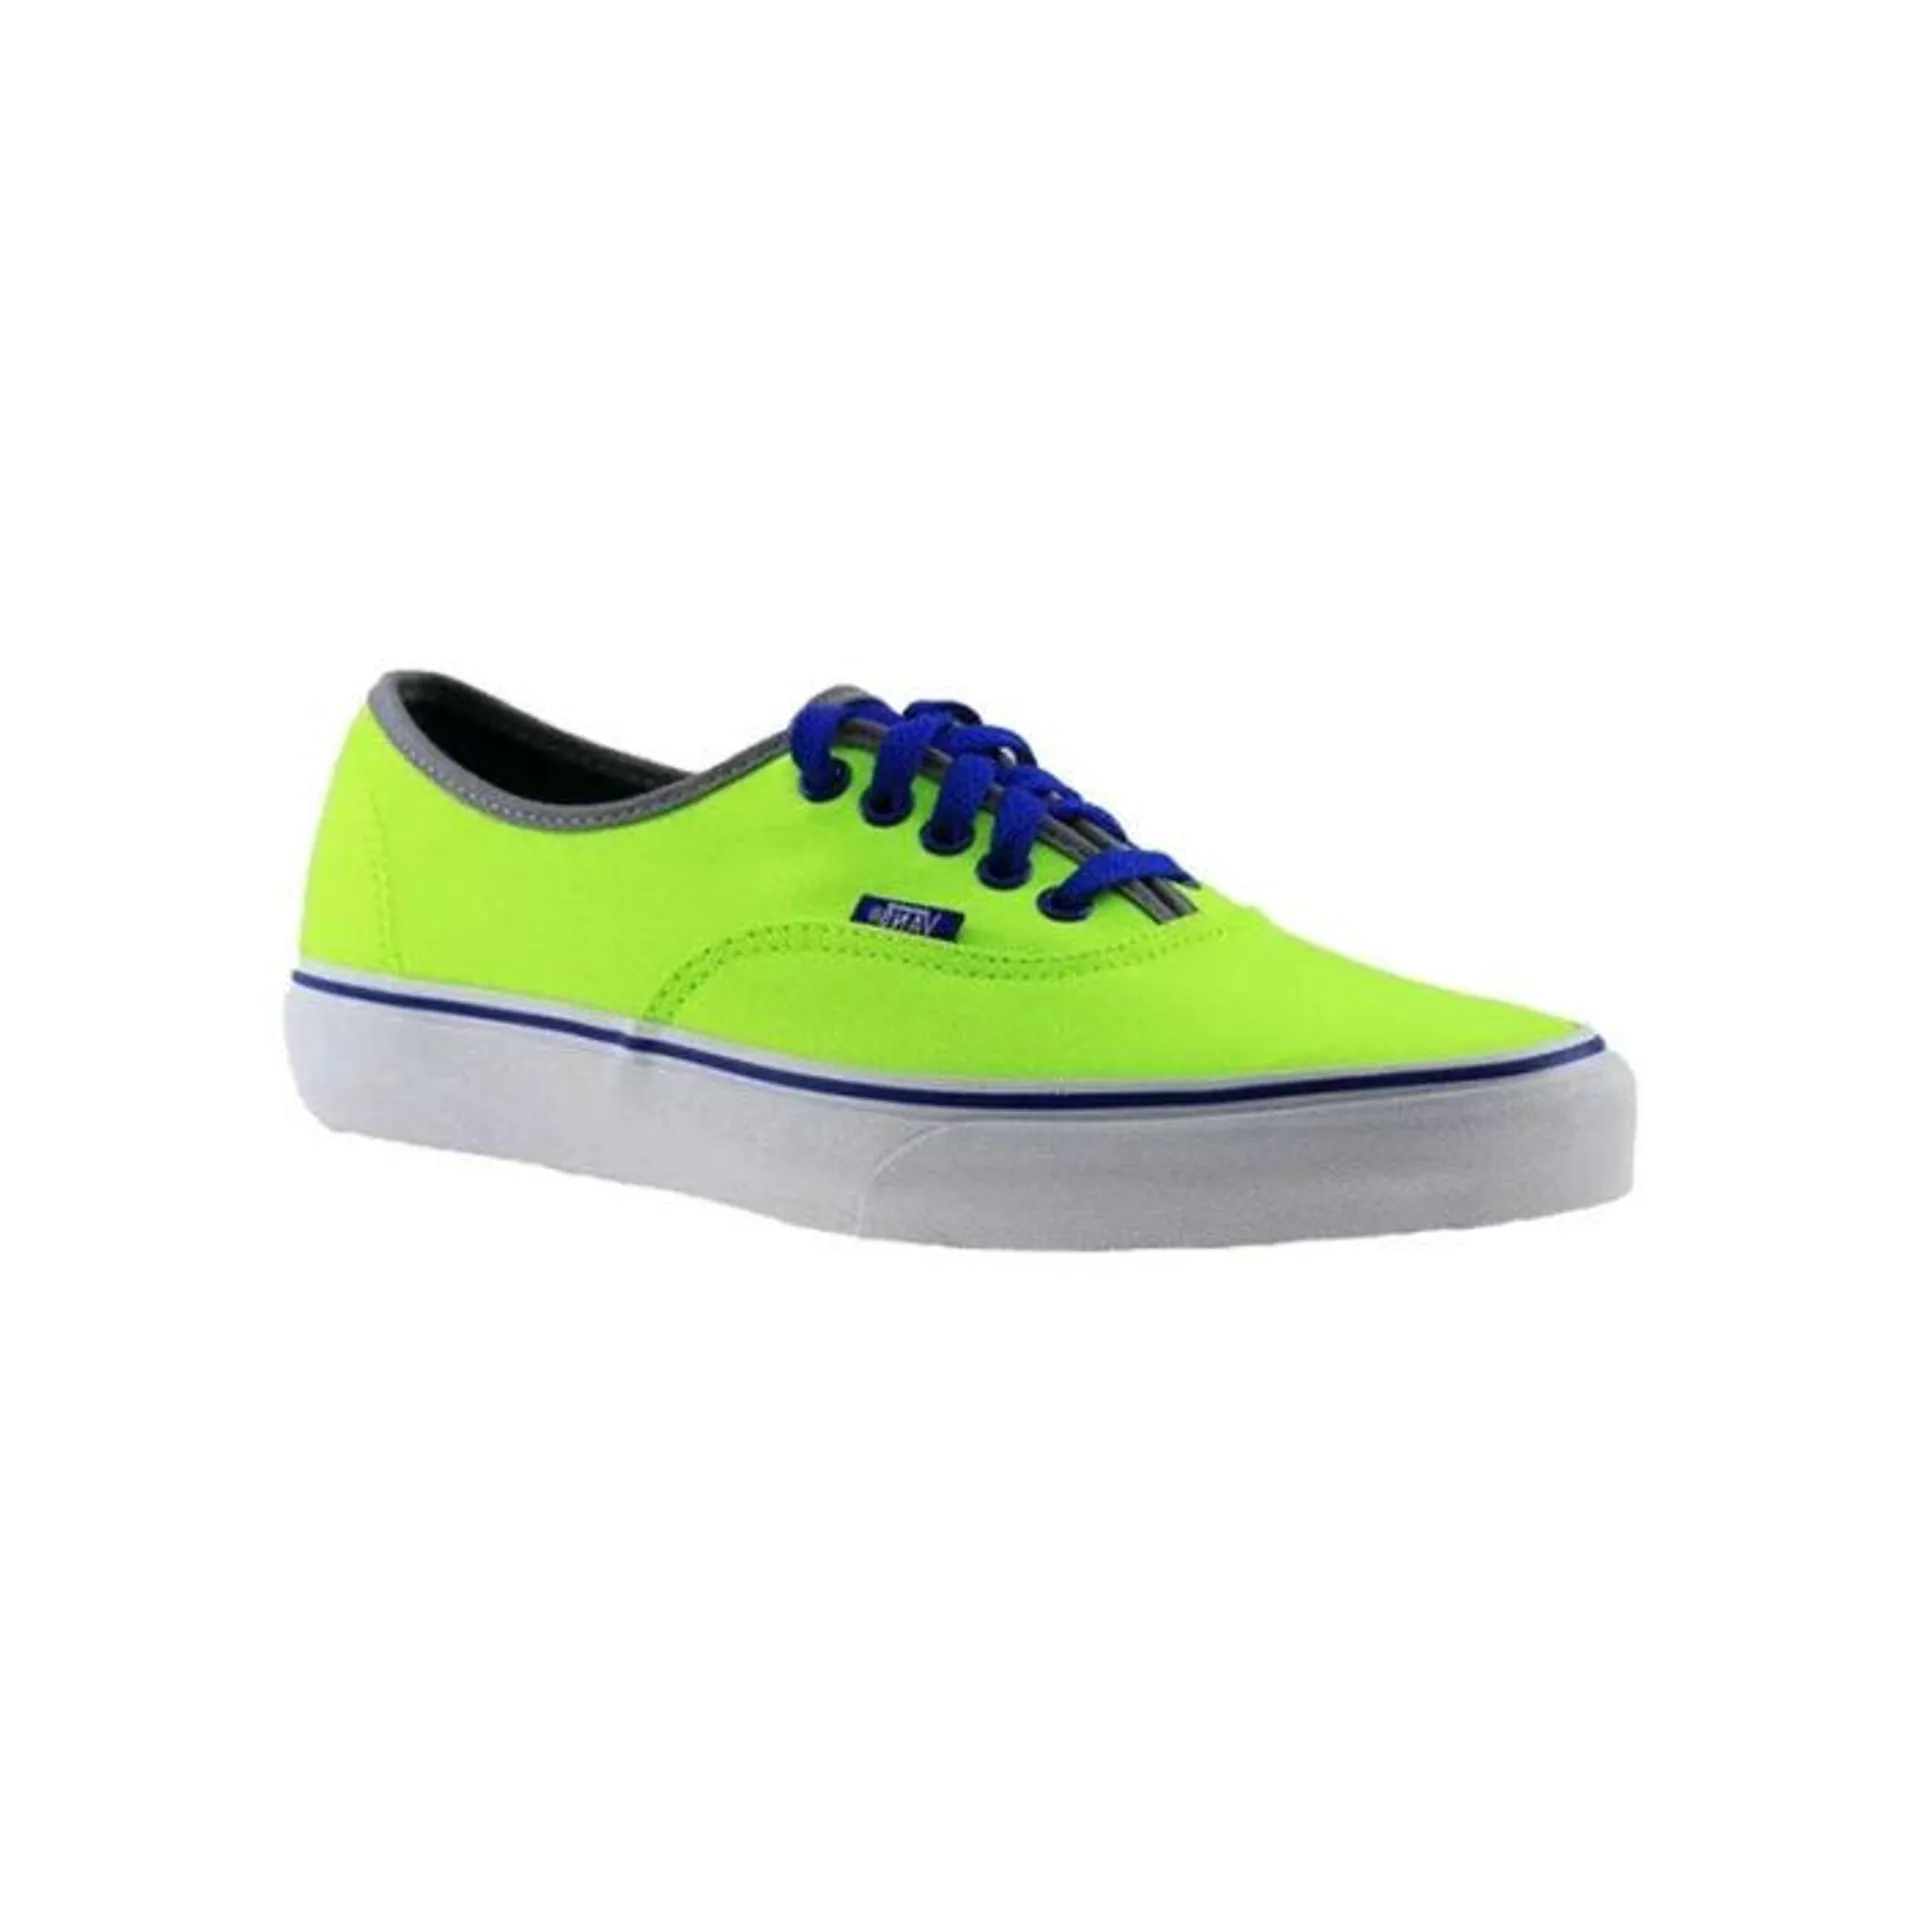 Zapatos Vans Authentic Neon Green Talla 9.0